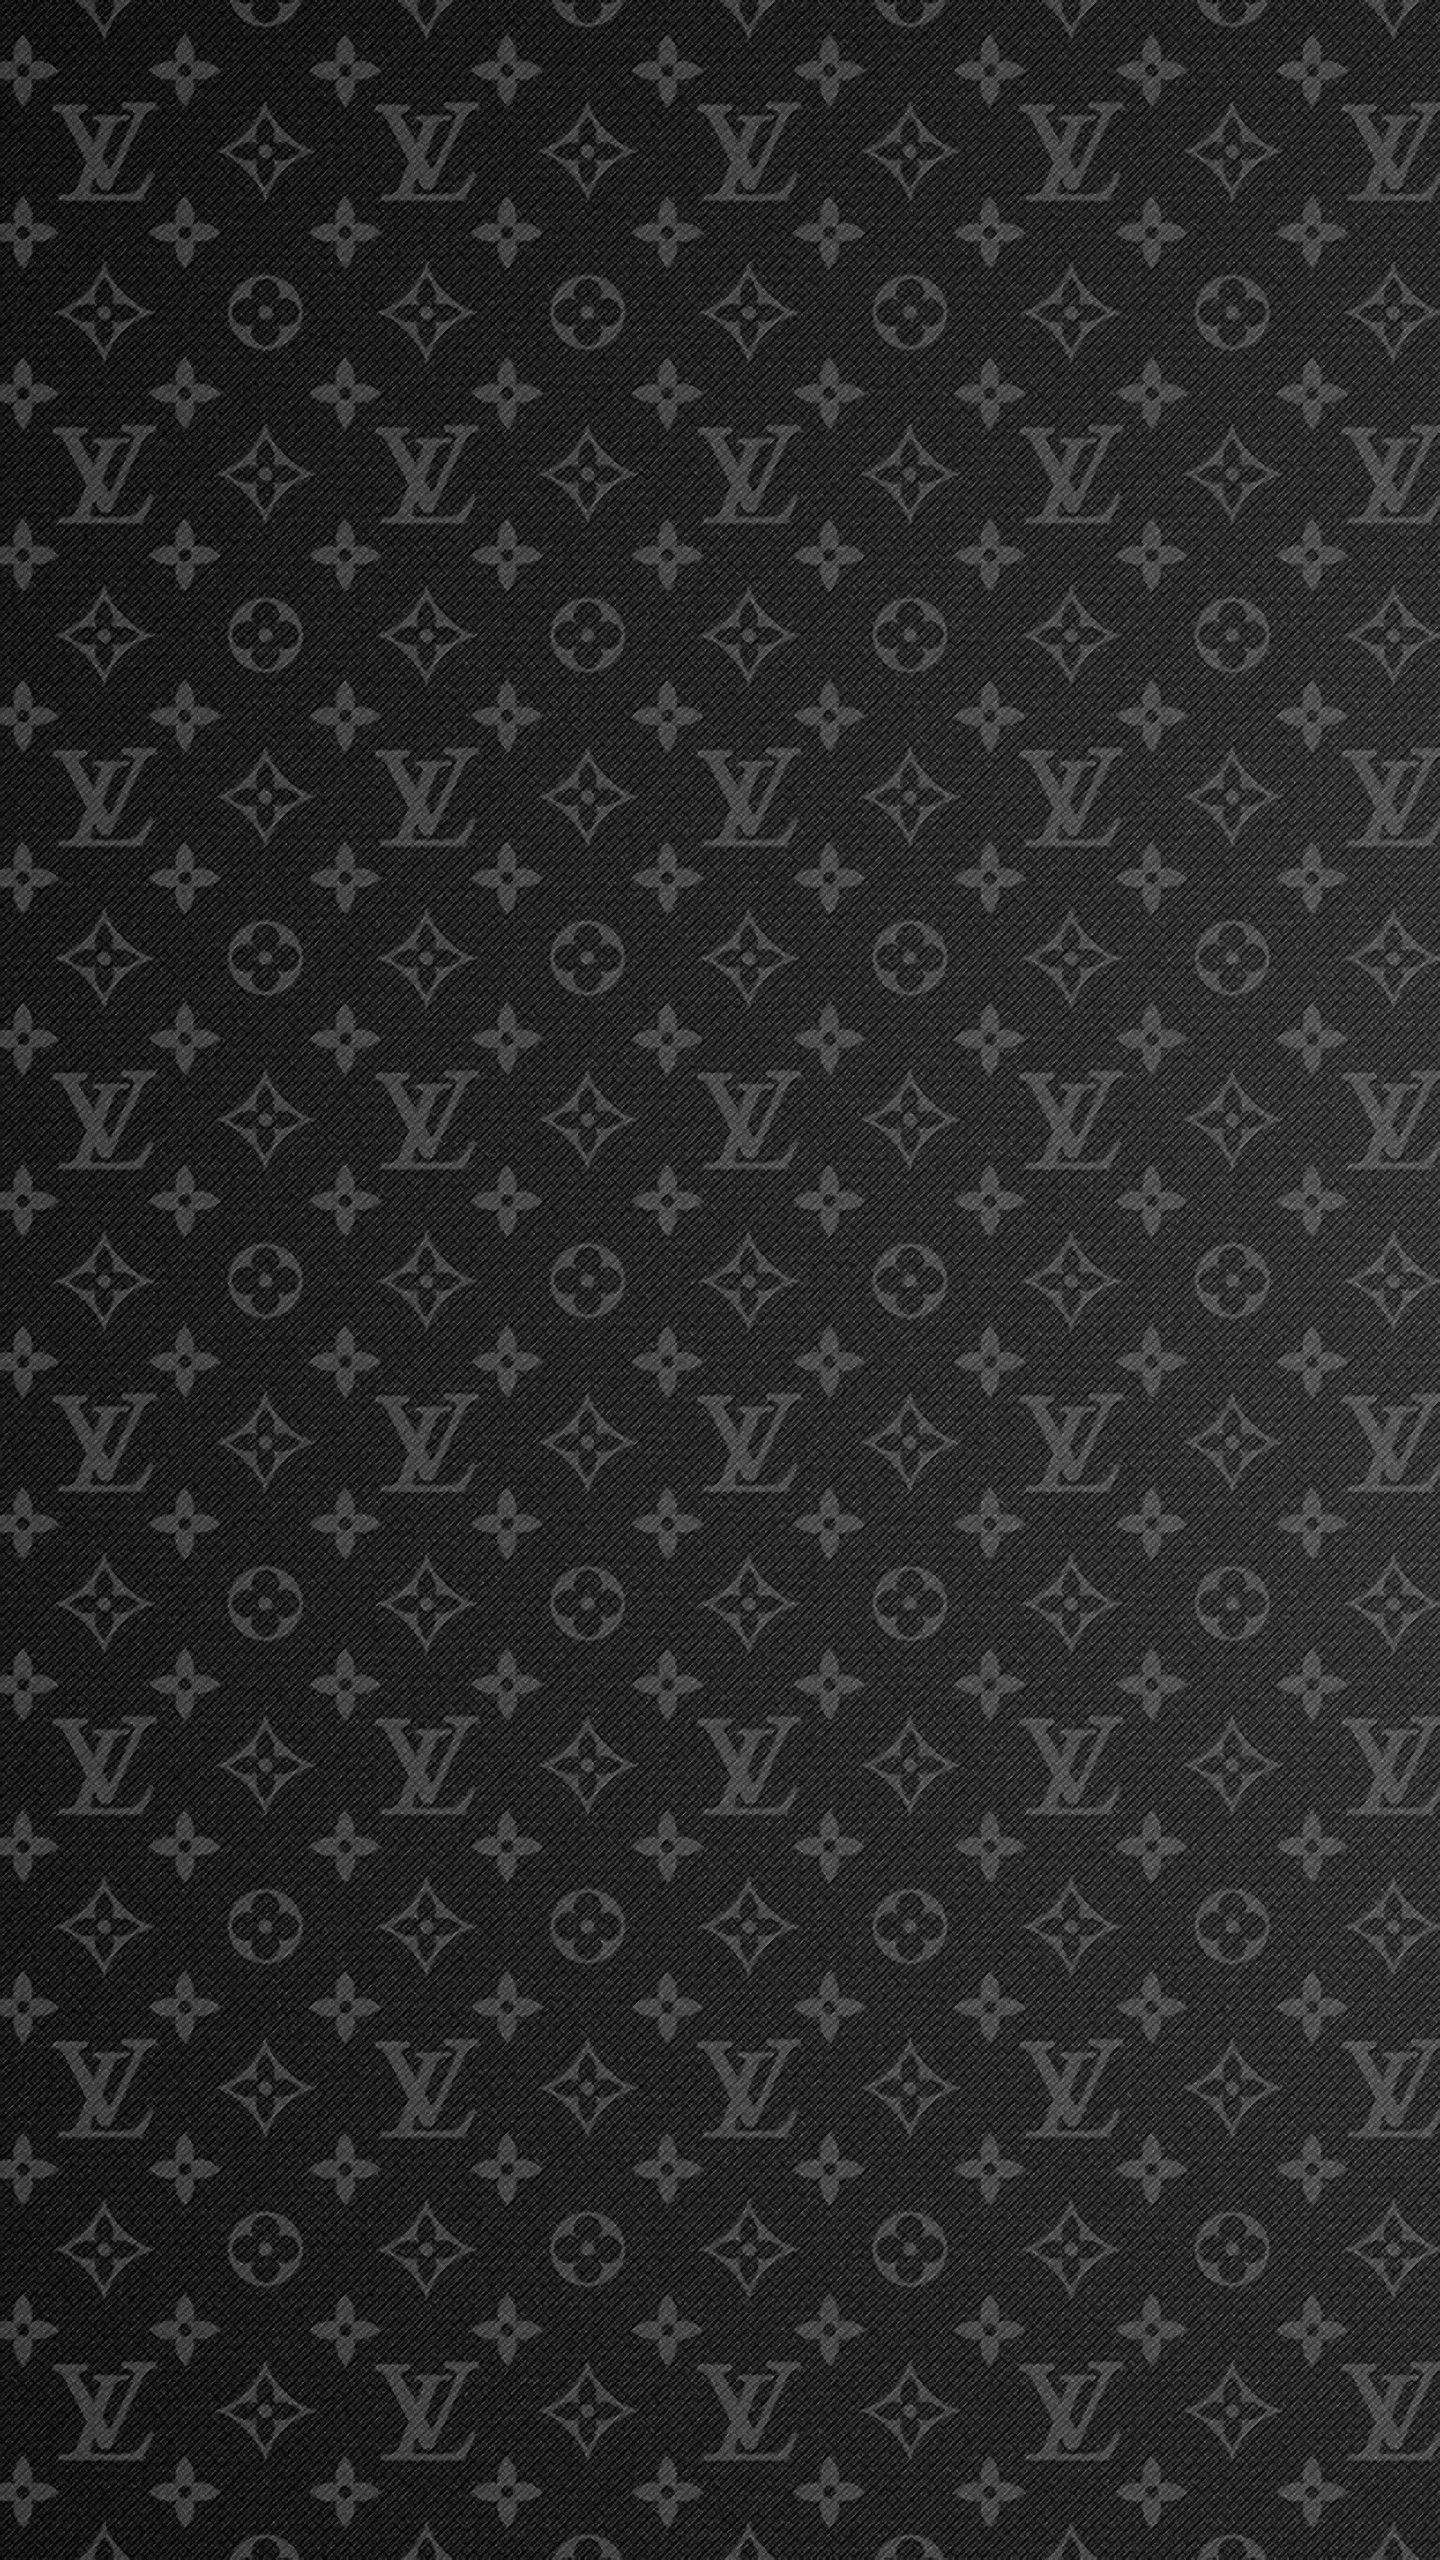 Louis Vuitton Monogram Wallpapers - Wallpaper Cave